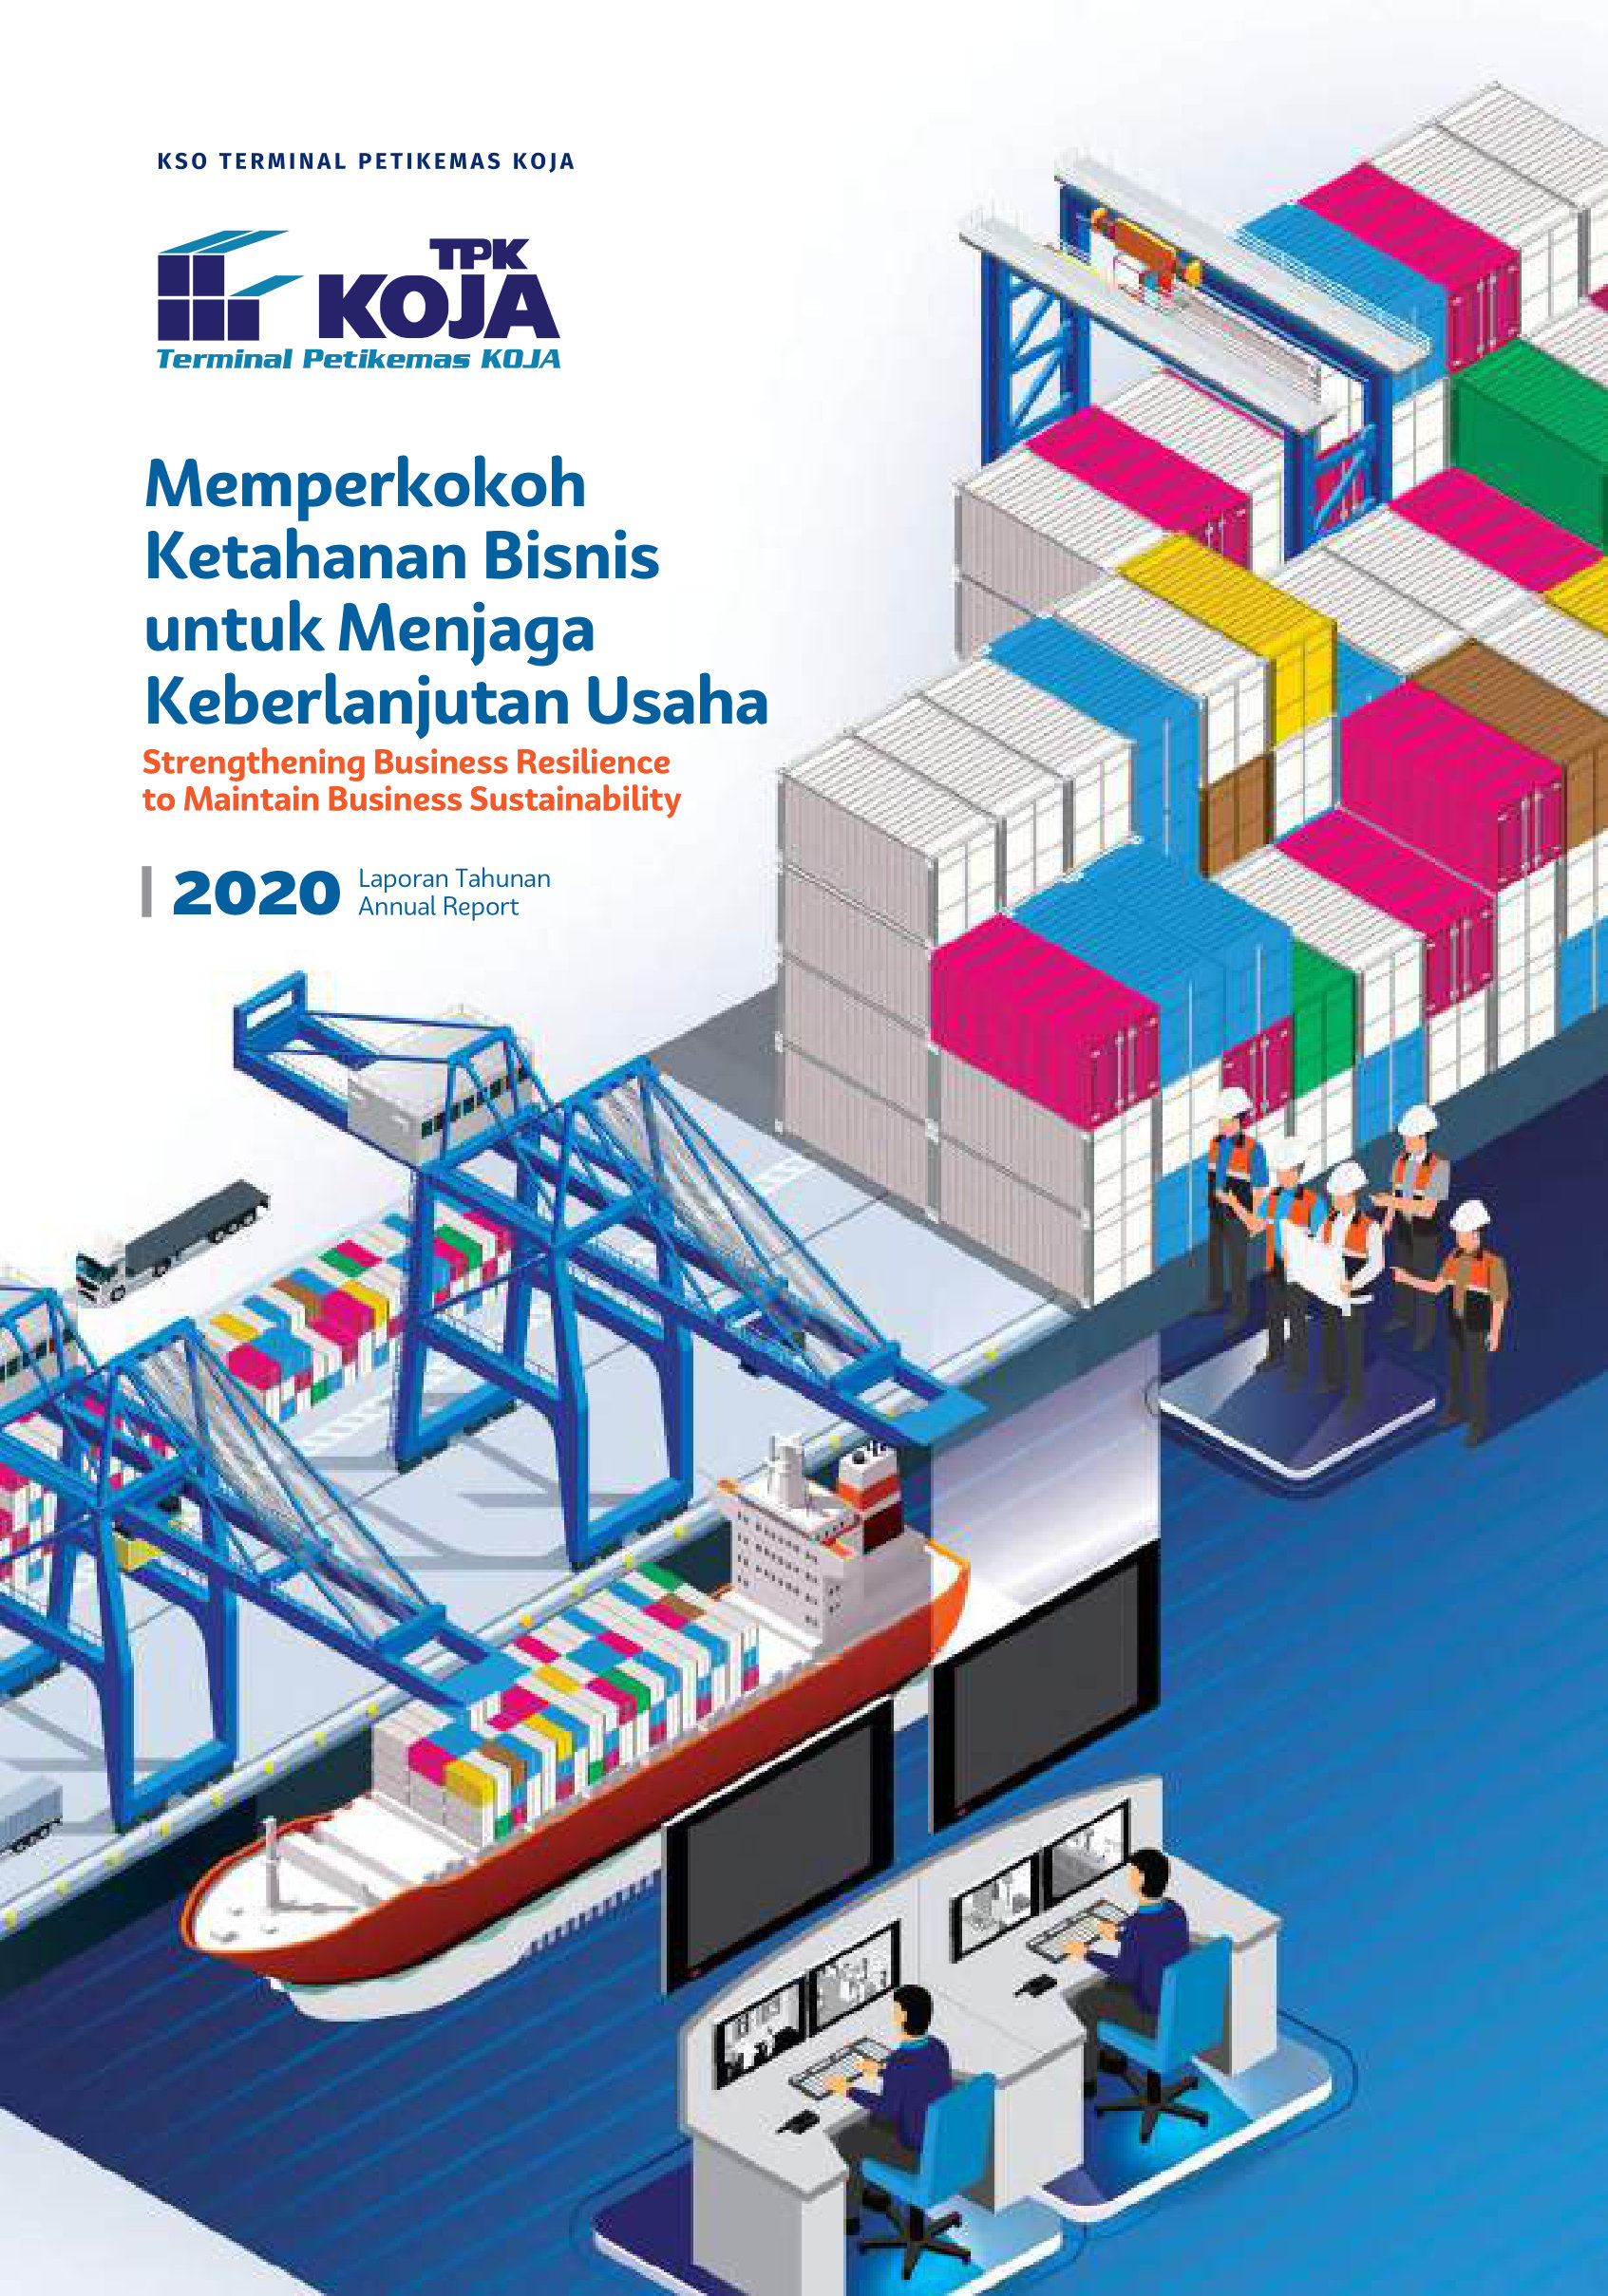 Annual Report KSO TPK Koja 2020